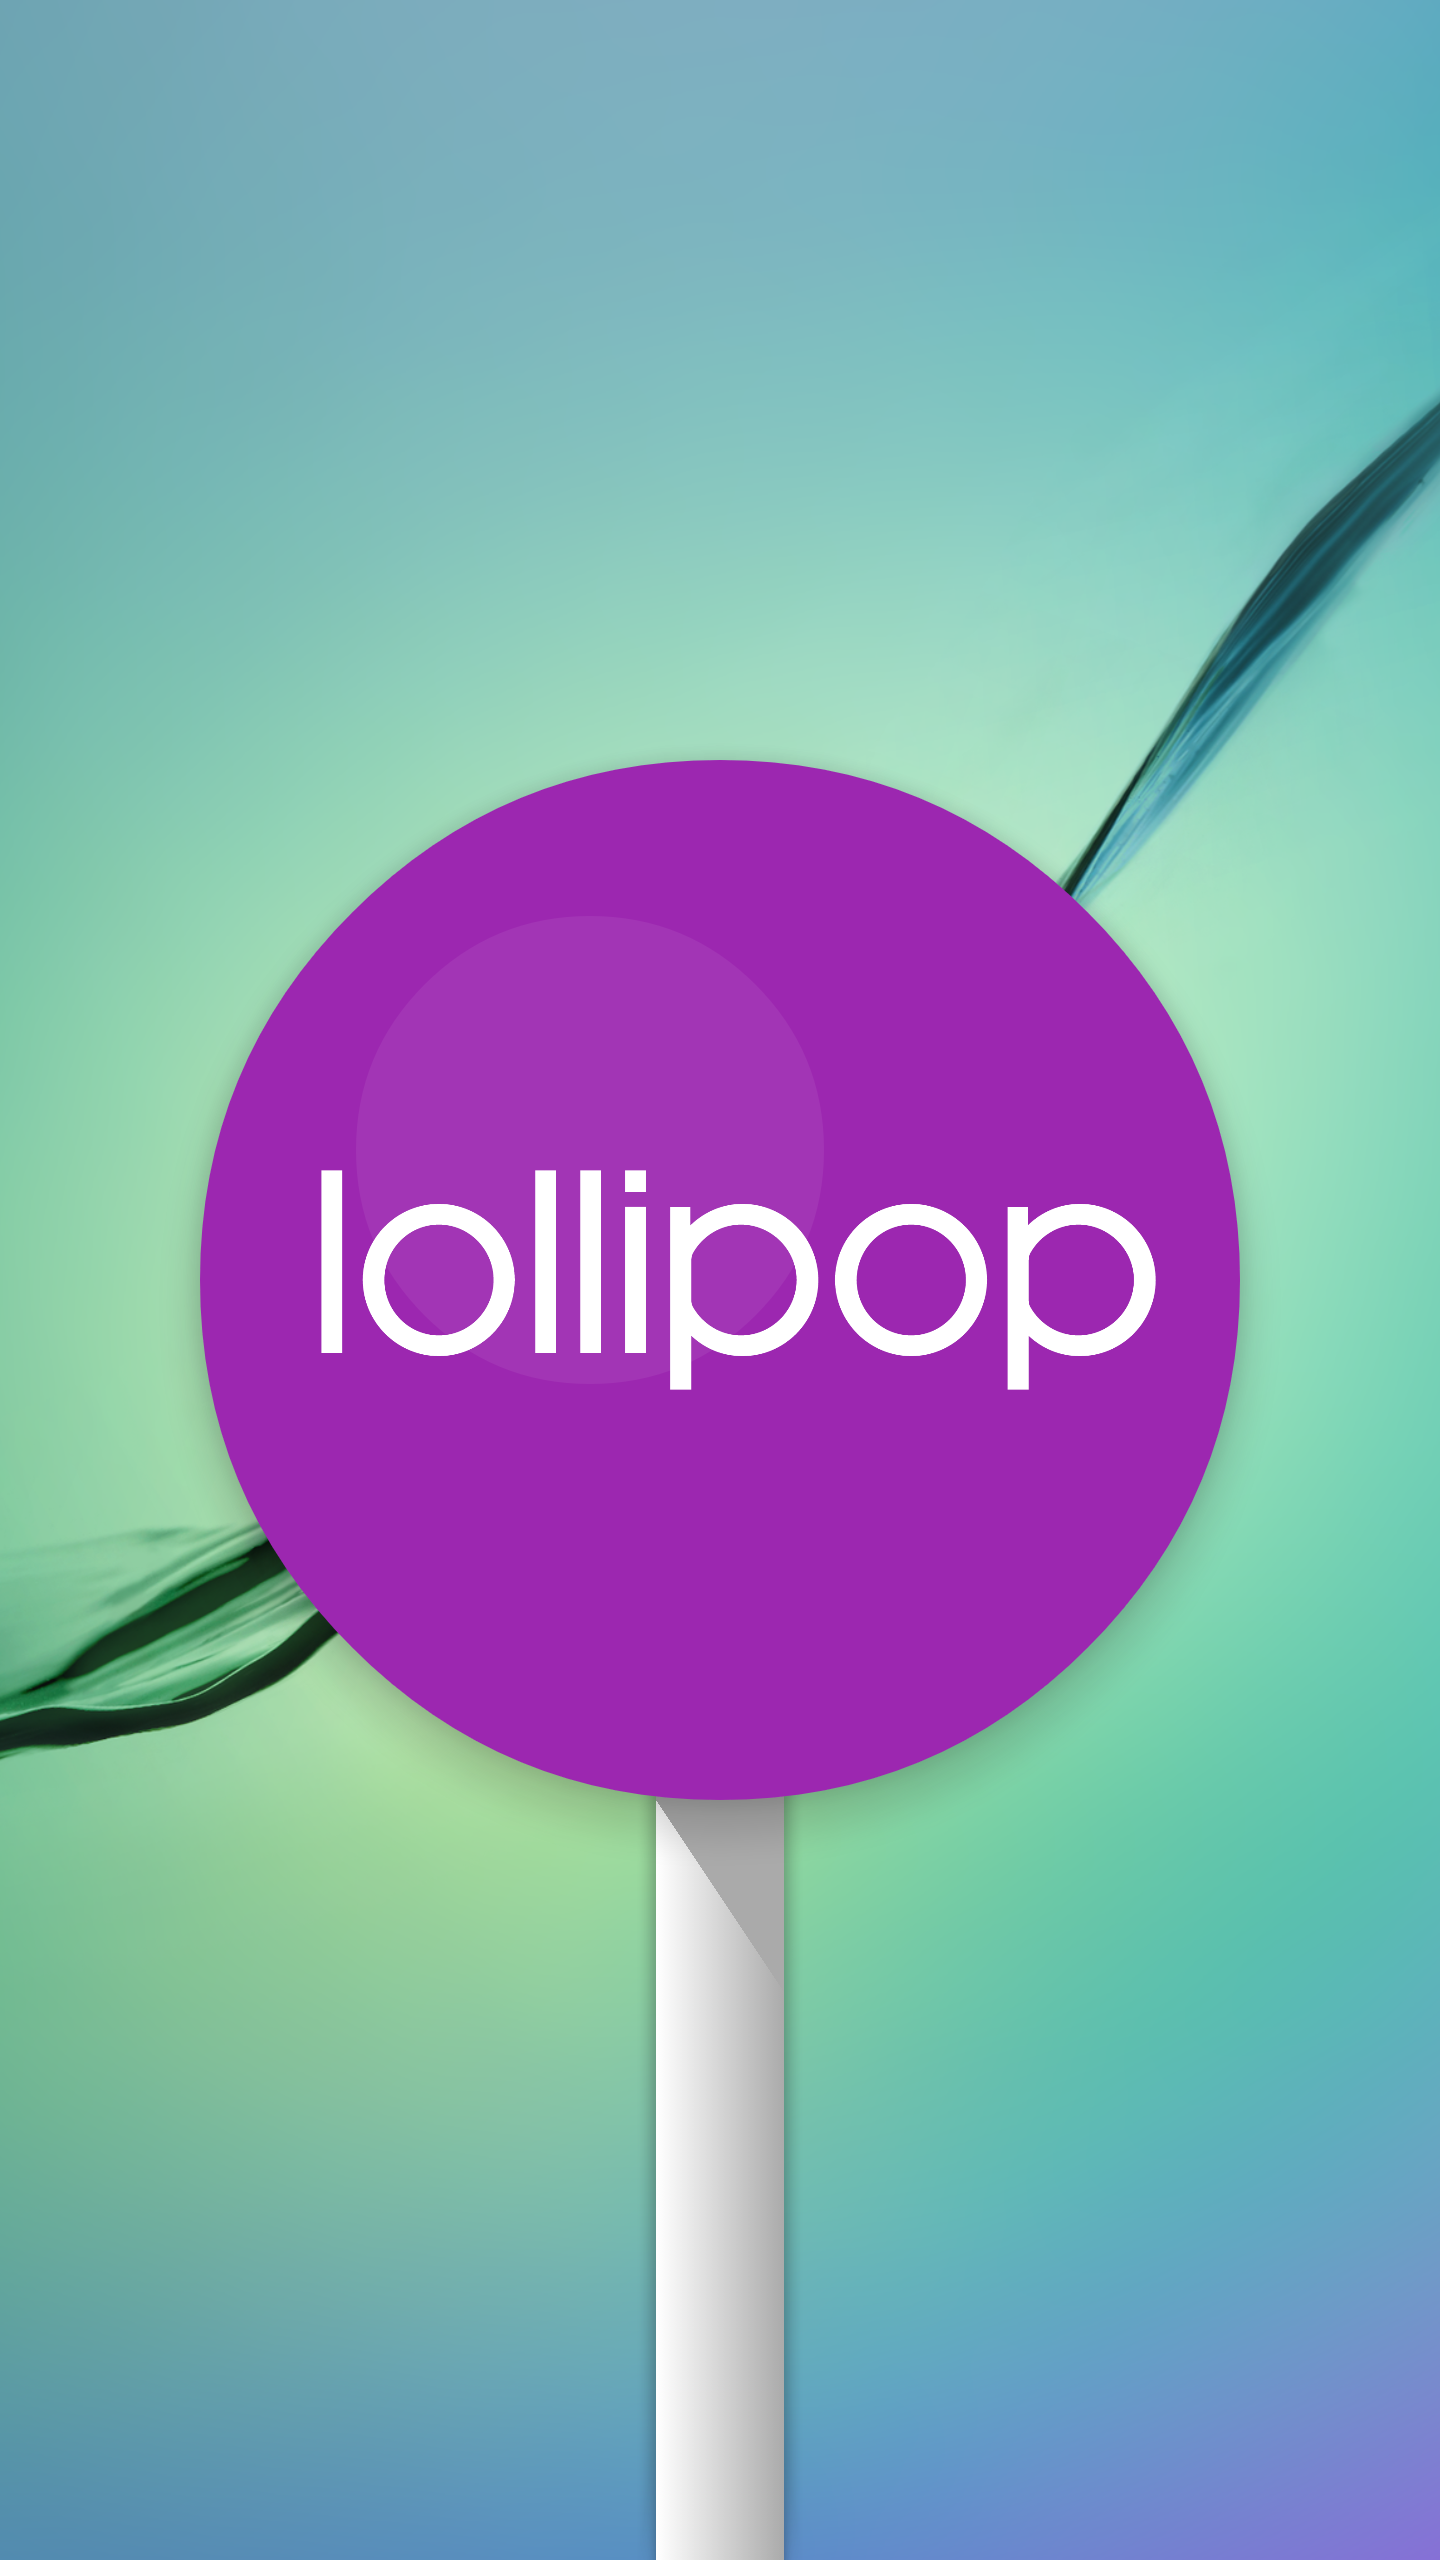 The hidden lollipop